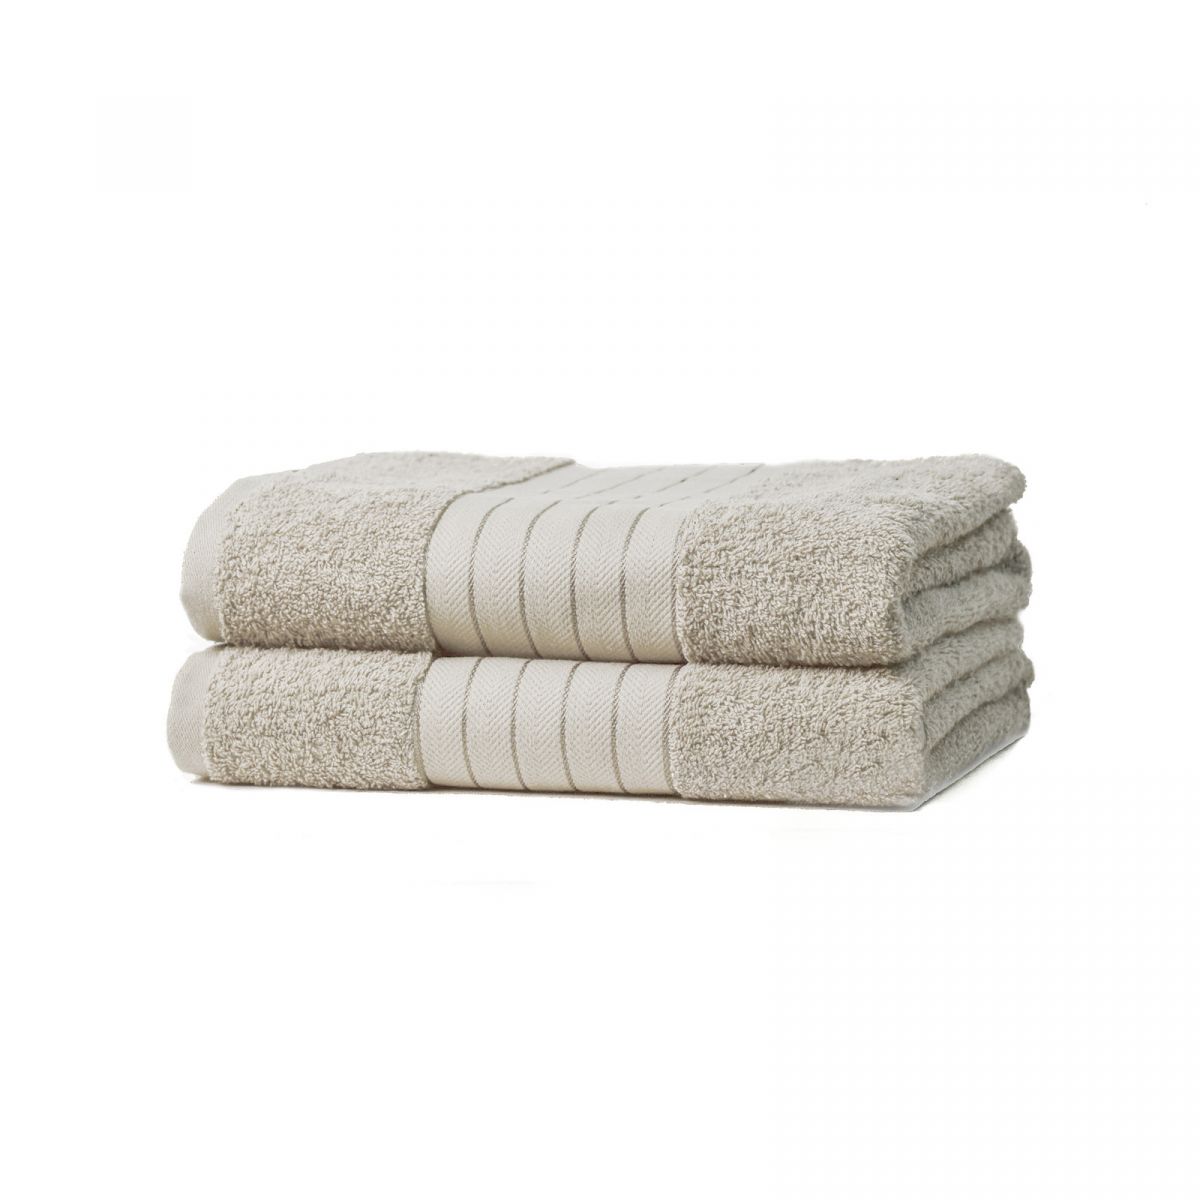 Dreamscene 100% Cotton 2 Bath Sheets Towel, Beige